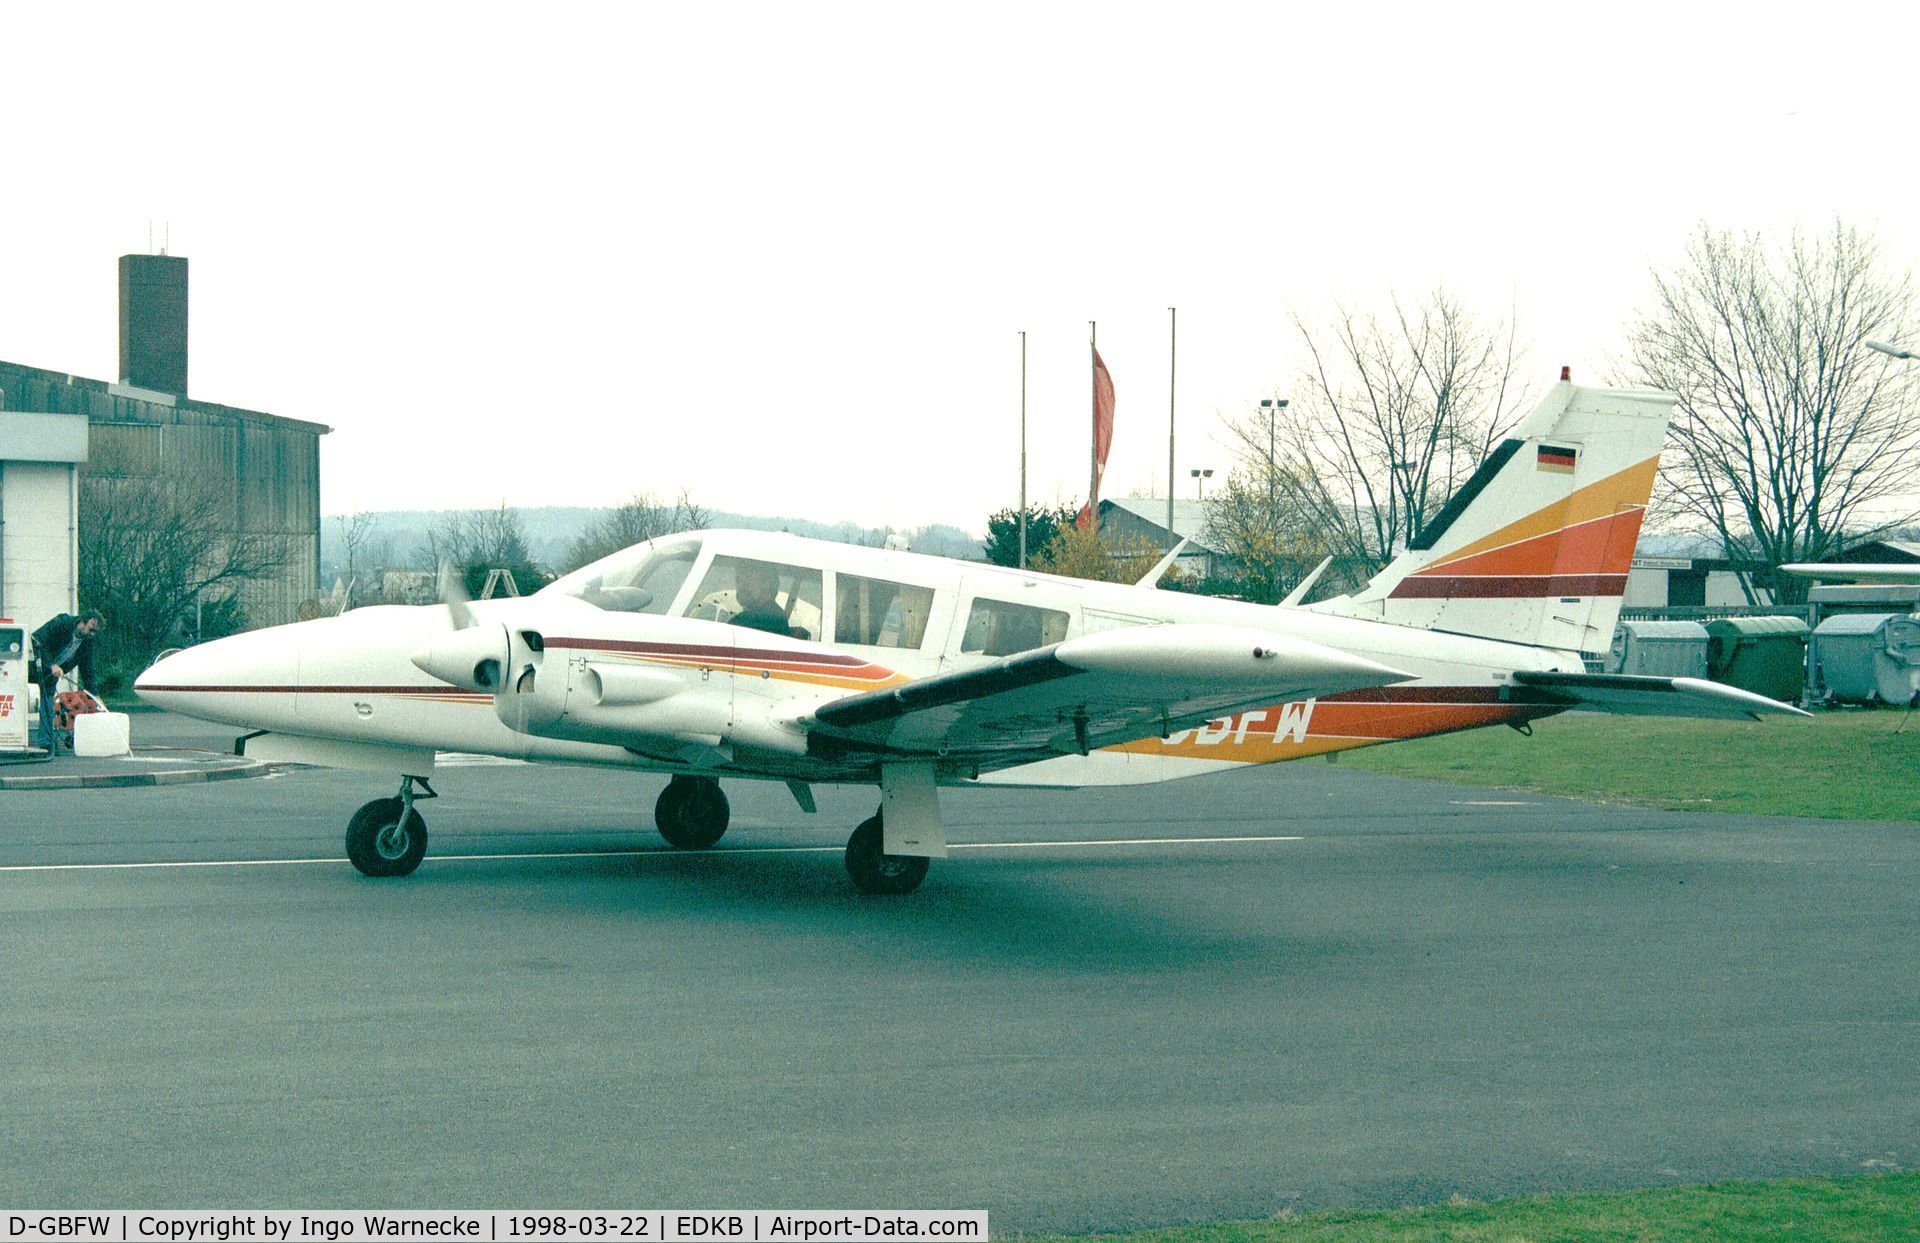 D-GBFW, 1973 Piper PA-34-200 C/N 34-7350116, Piper PA-34-200 Seneca at Bonn-Hangelar airfield